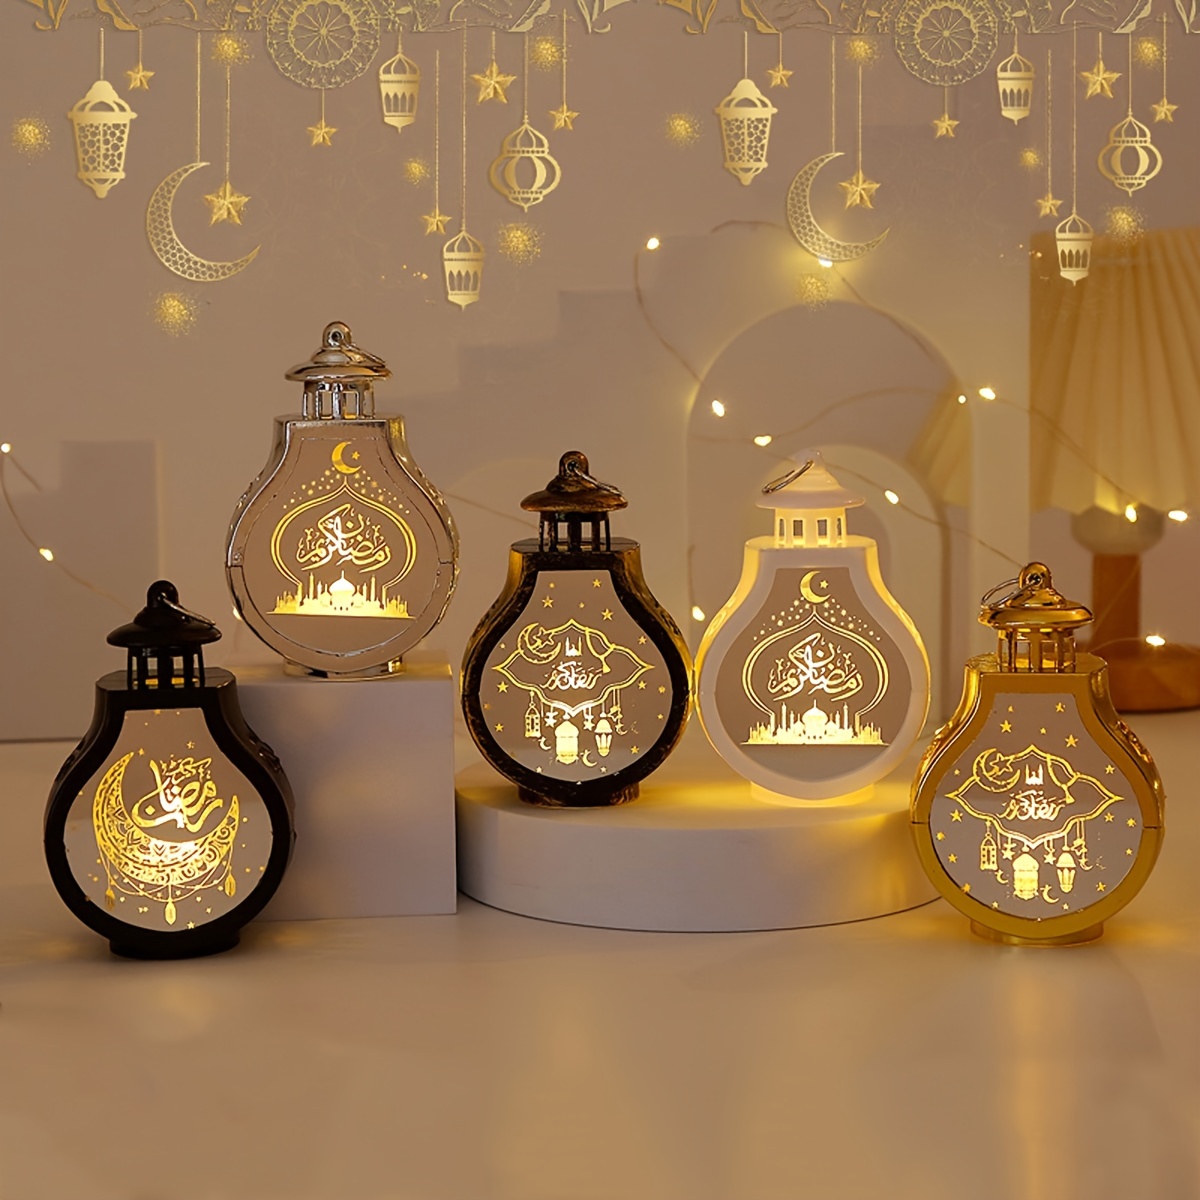 1 PC Lampe Européenne Ramadan, Mini Lampe à Vent Hexagonale En